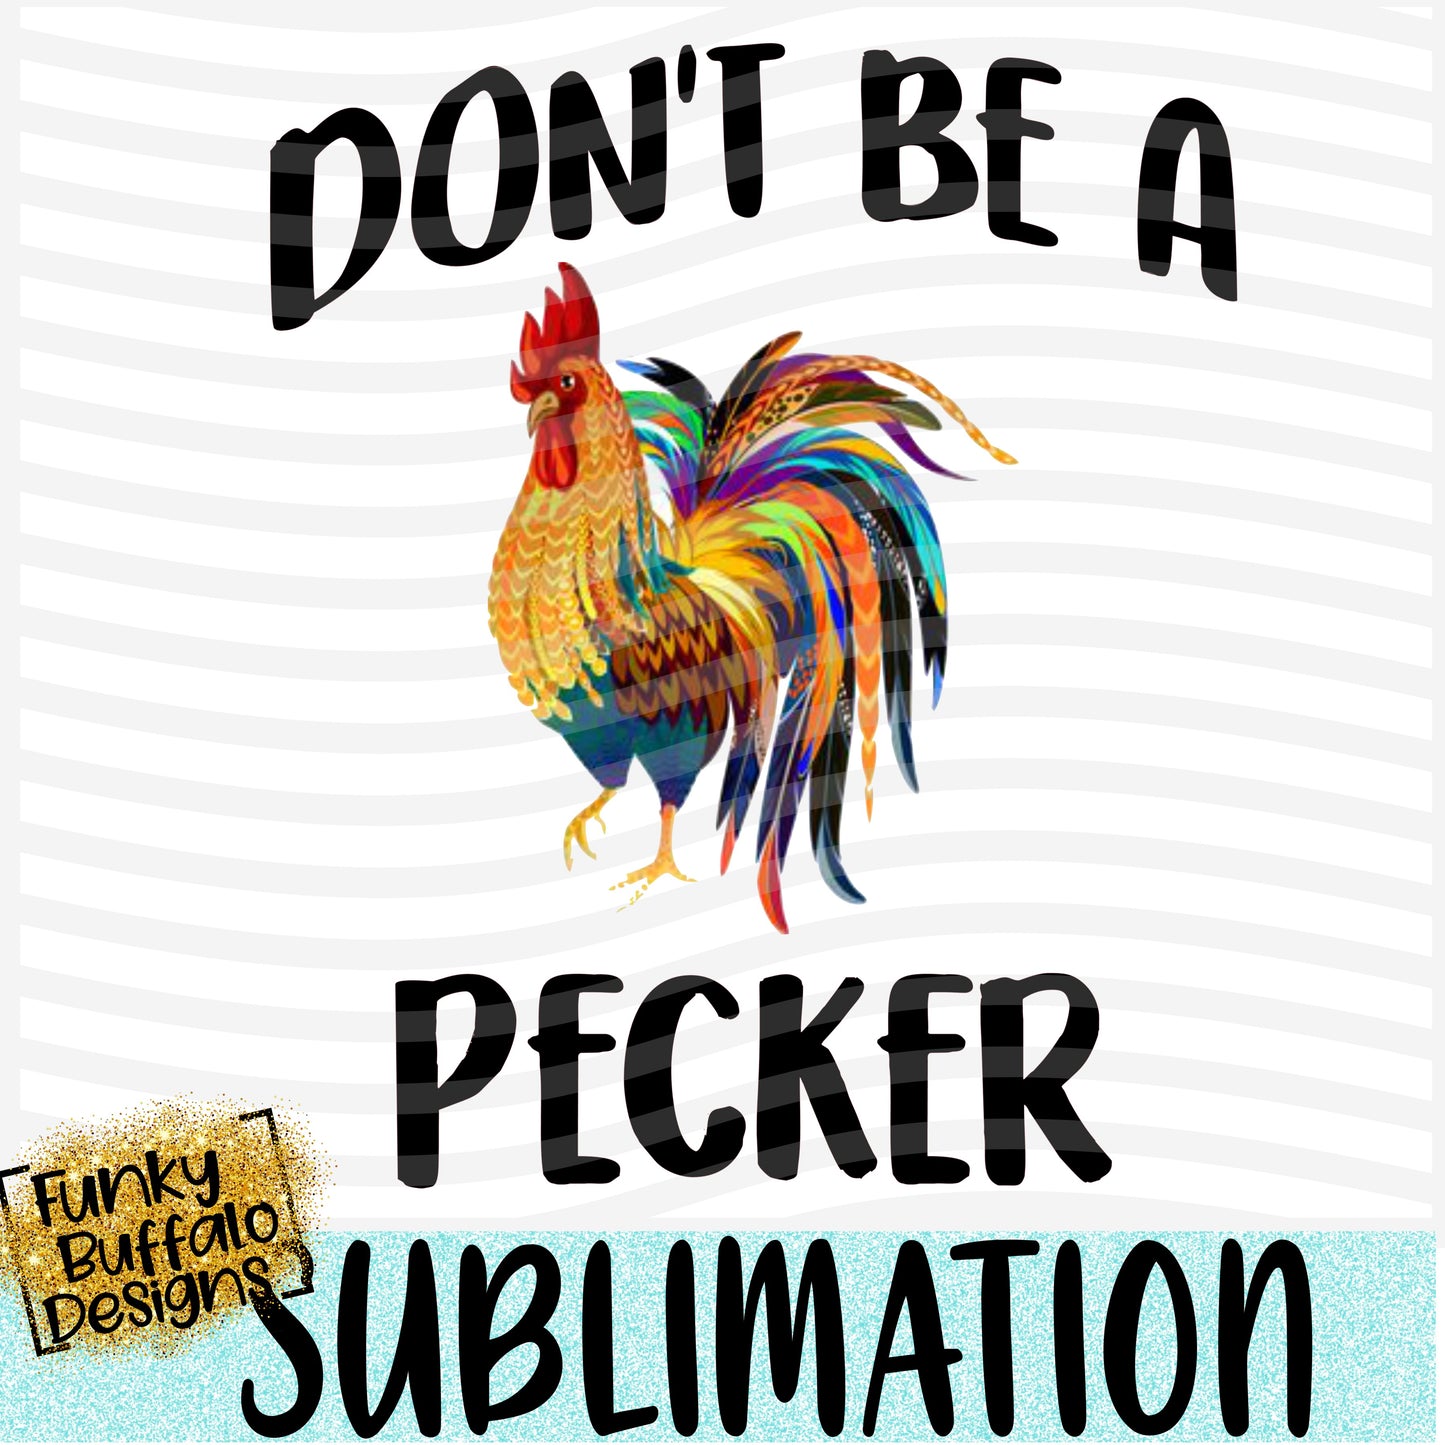 Don't be a Pecker